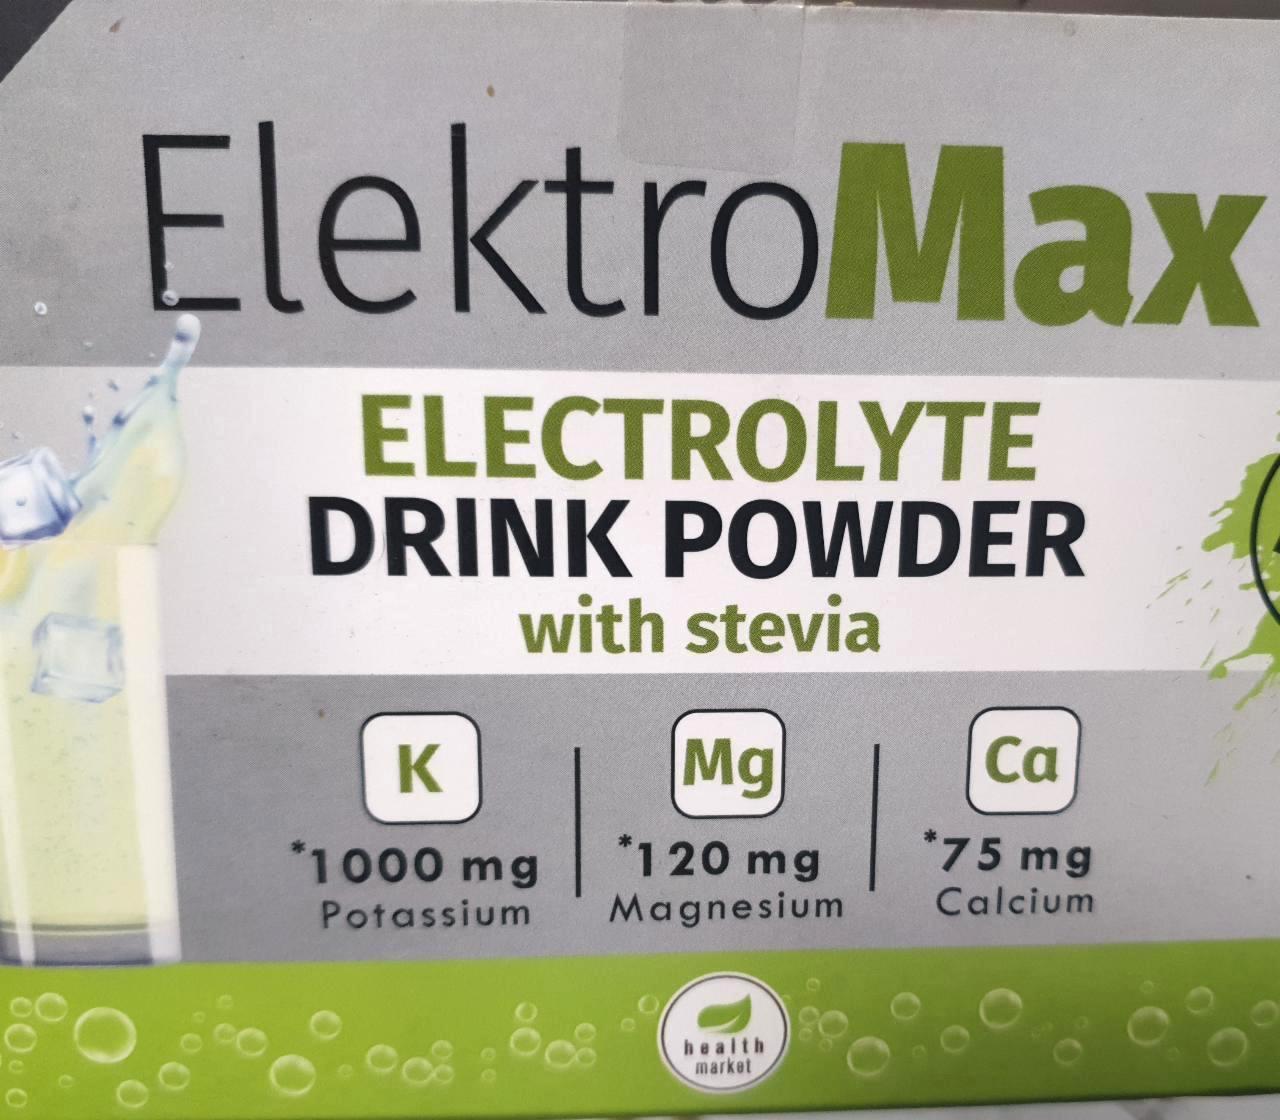 Képek - Elektrolyte drink powder with Stevia ElektroMax